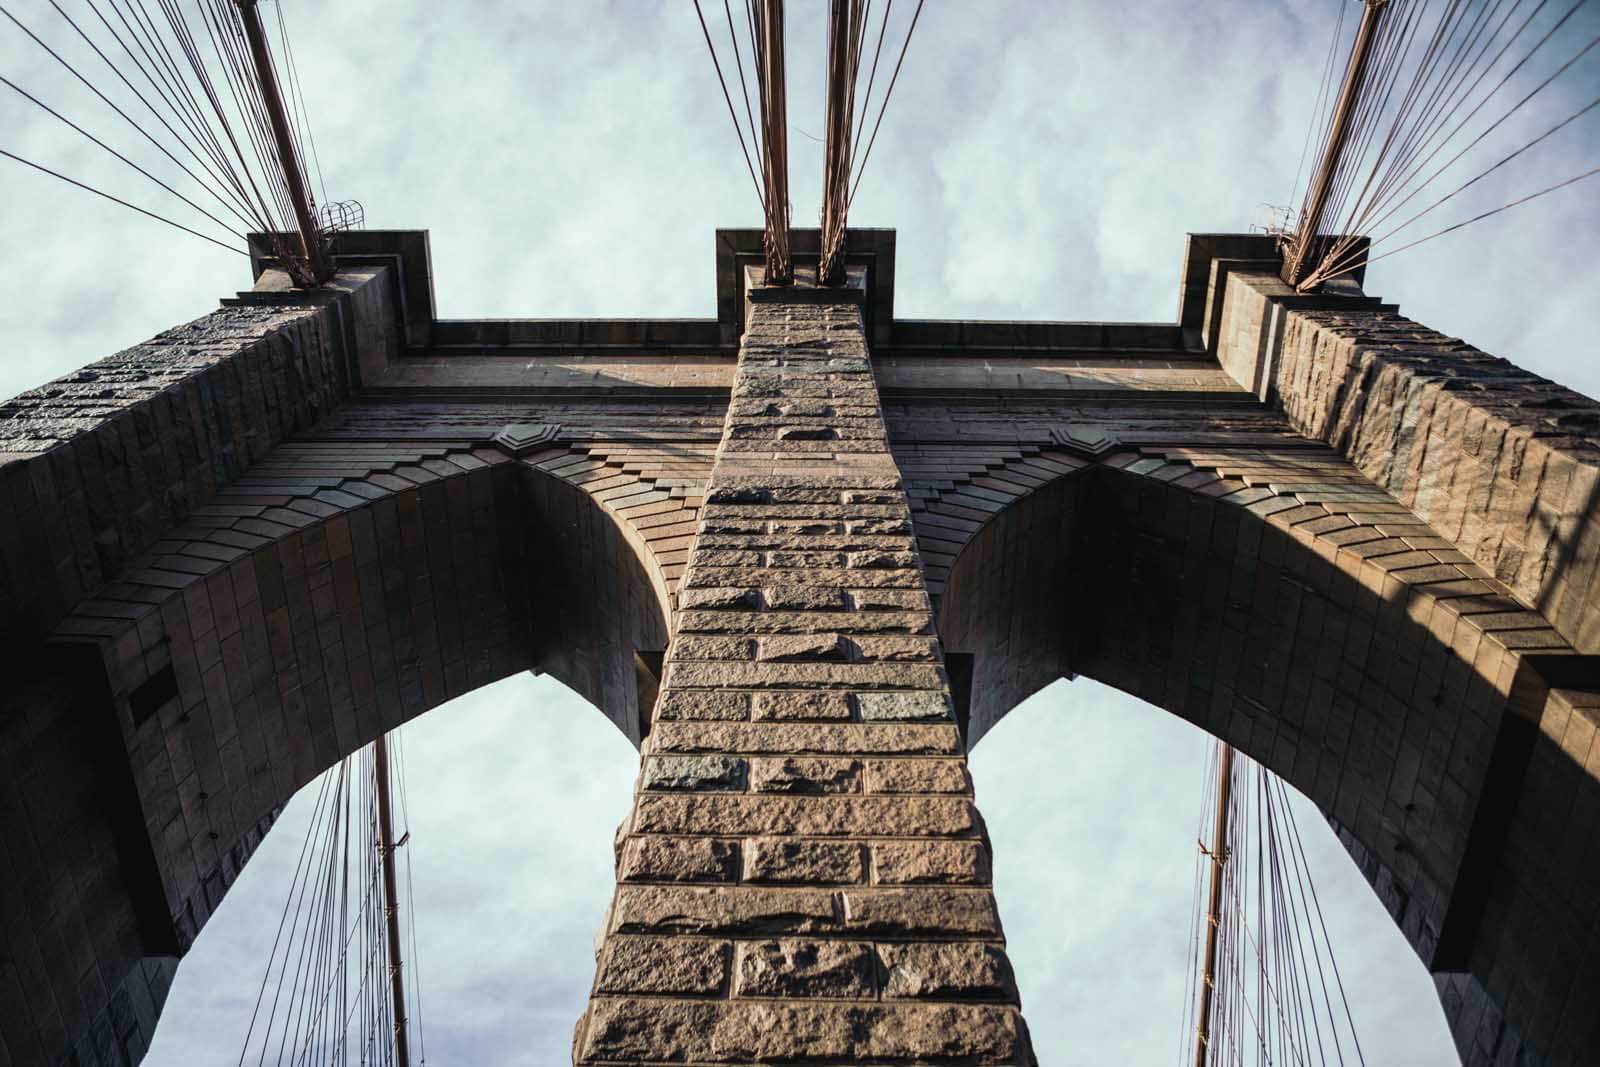 Looking up at the Brooklyn Bridge